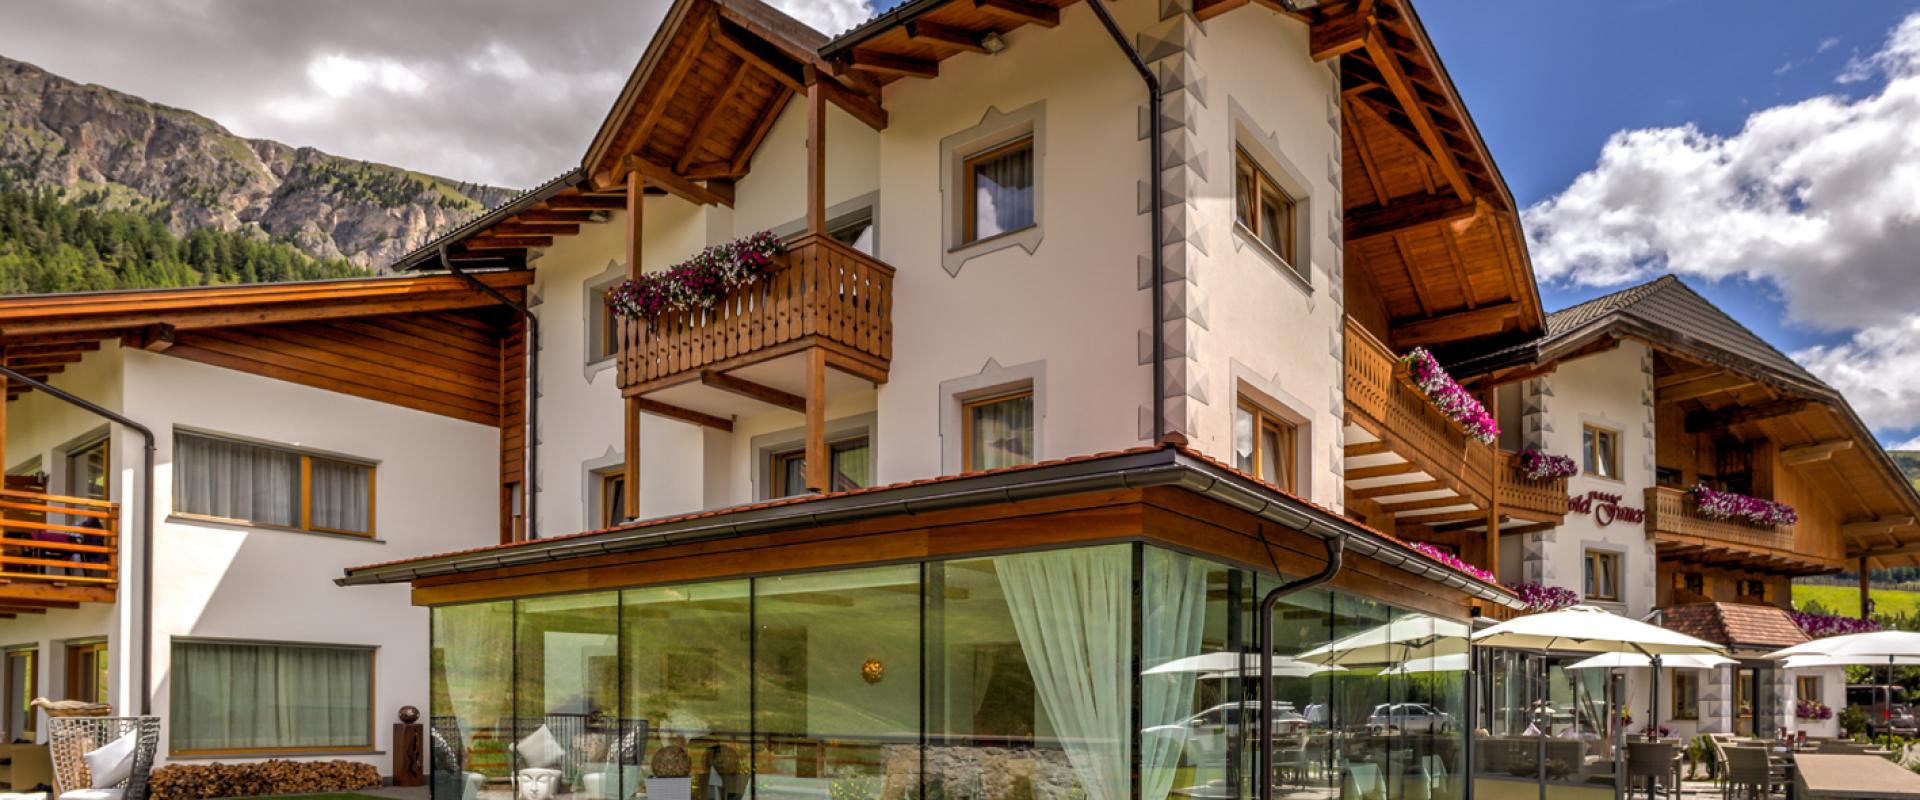 14337 Motorrad Hotel Fanes in Südtirol/Dolomiten.jpg